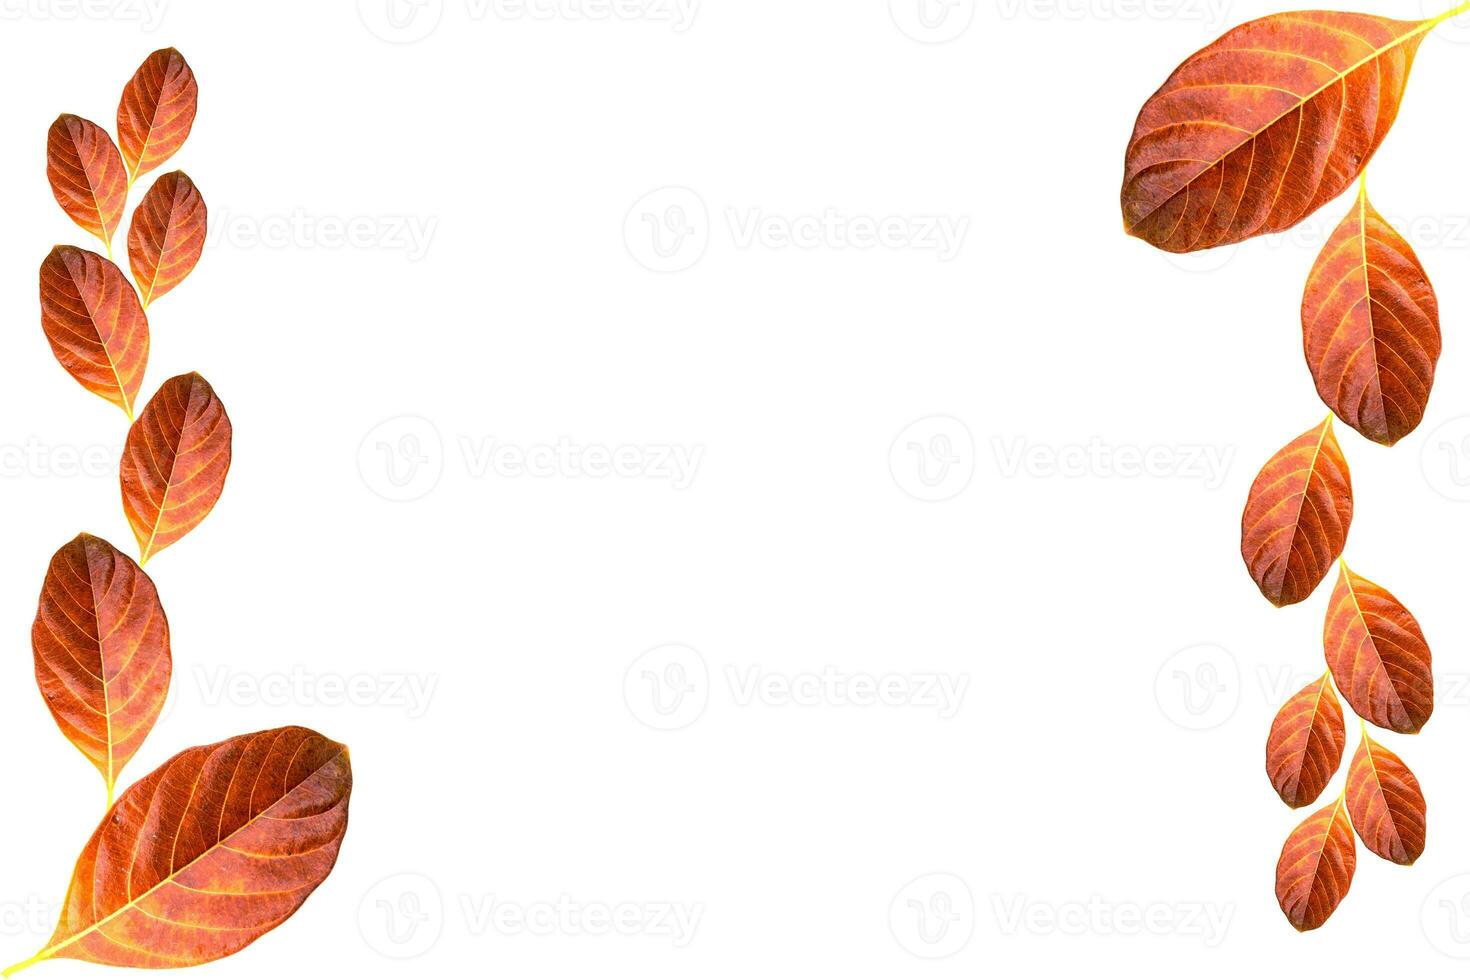 stänga upp orange blad på vit bakgrund. foto